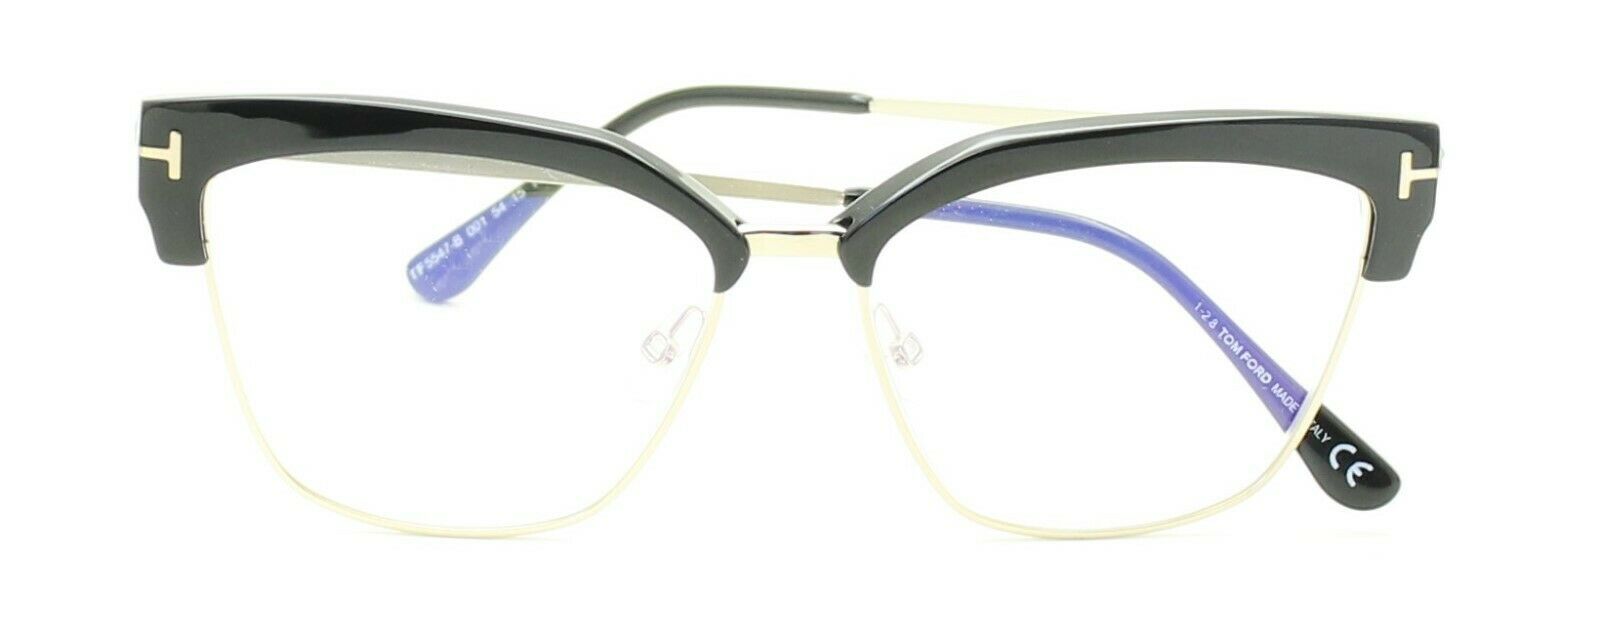 TOM FORD FT 5547-B 001 Eyewear FRAMES RX Optical Eyeglasses Glasses Italy -  New - GGV Eyewear